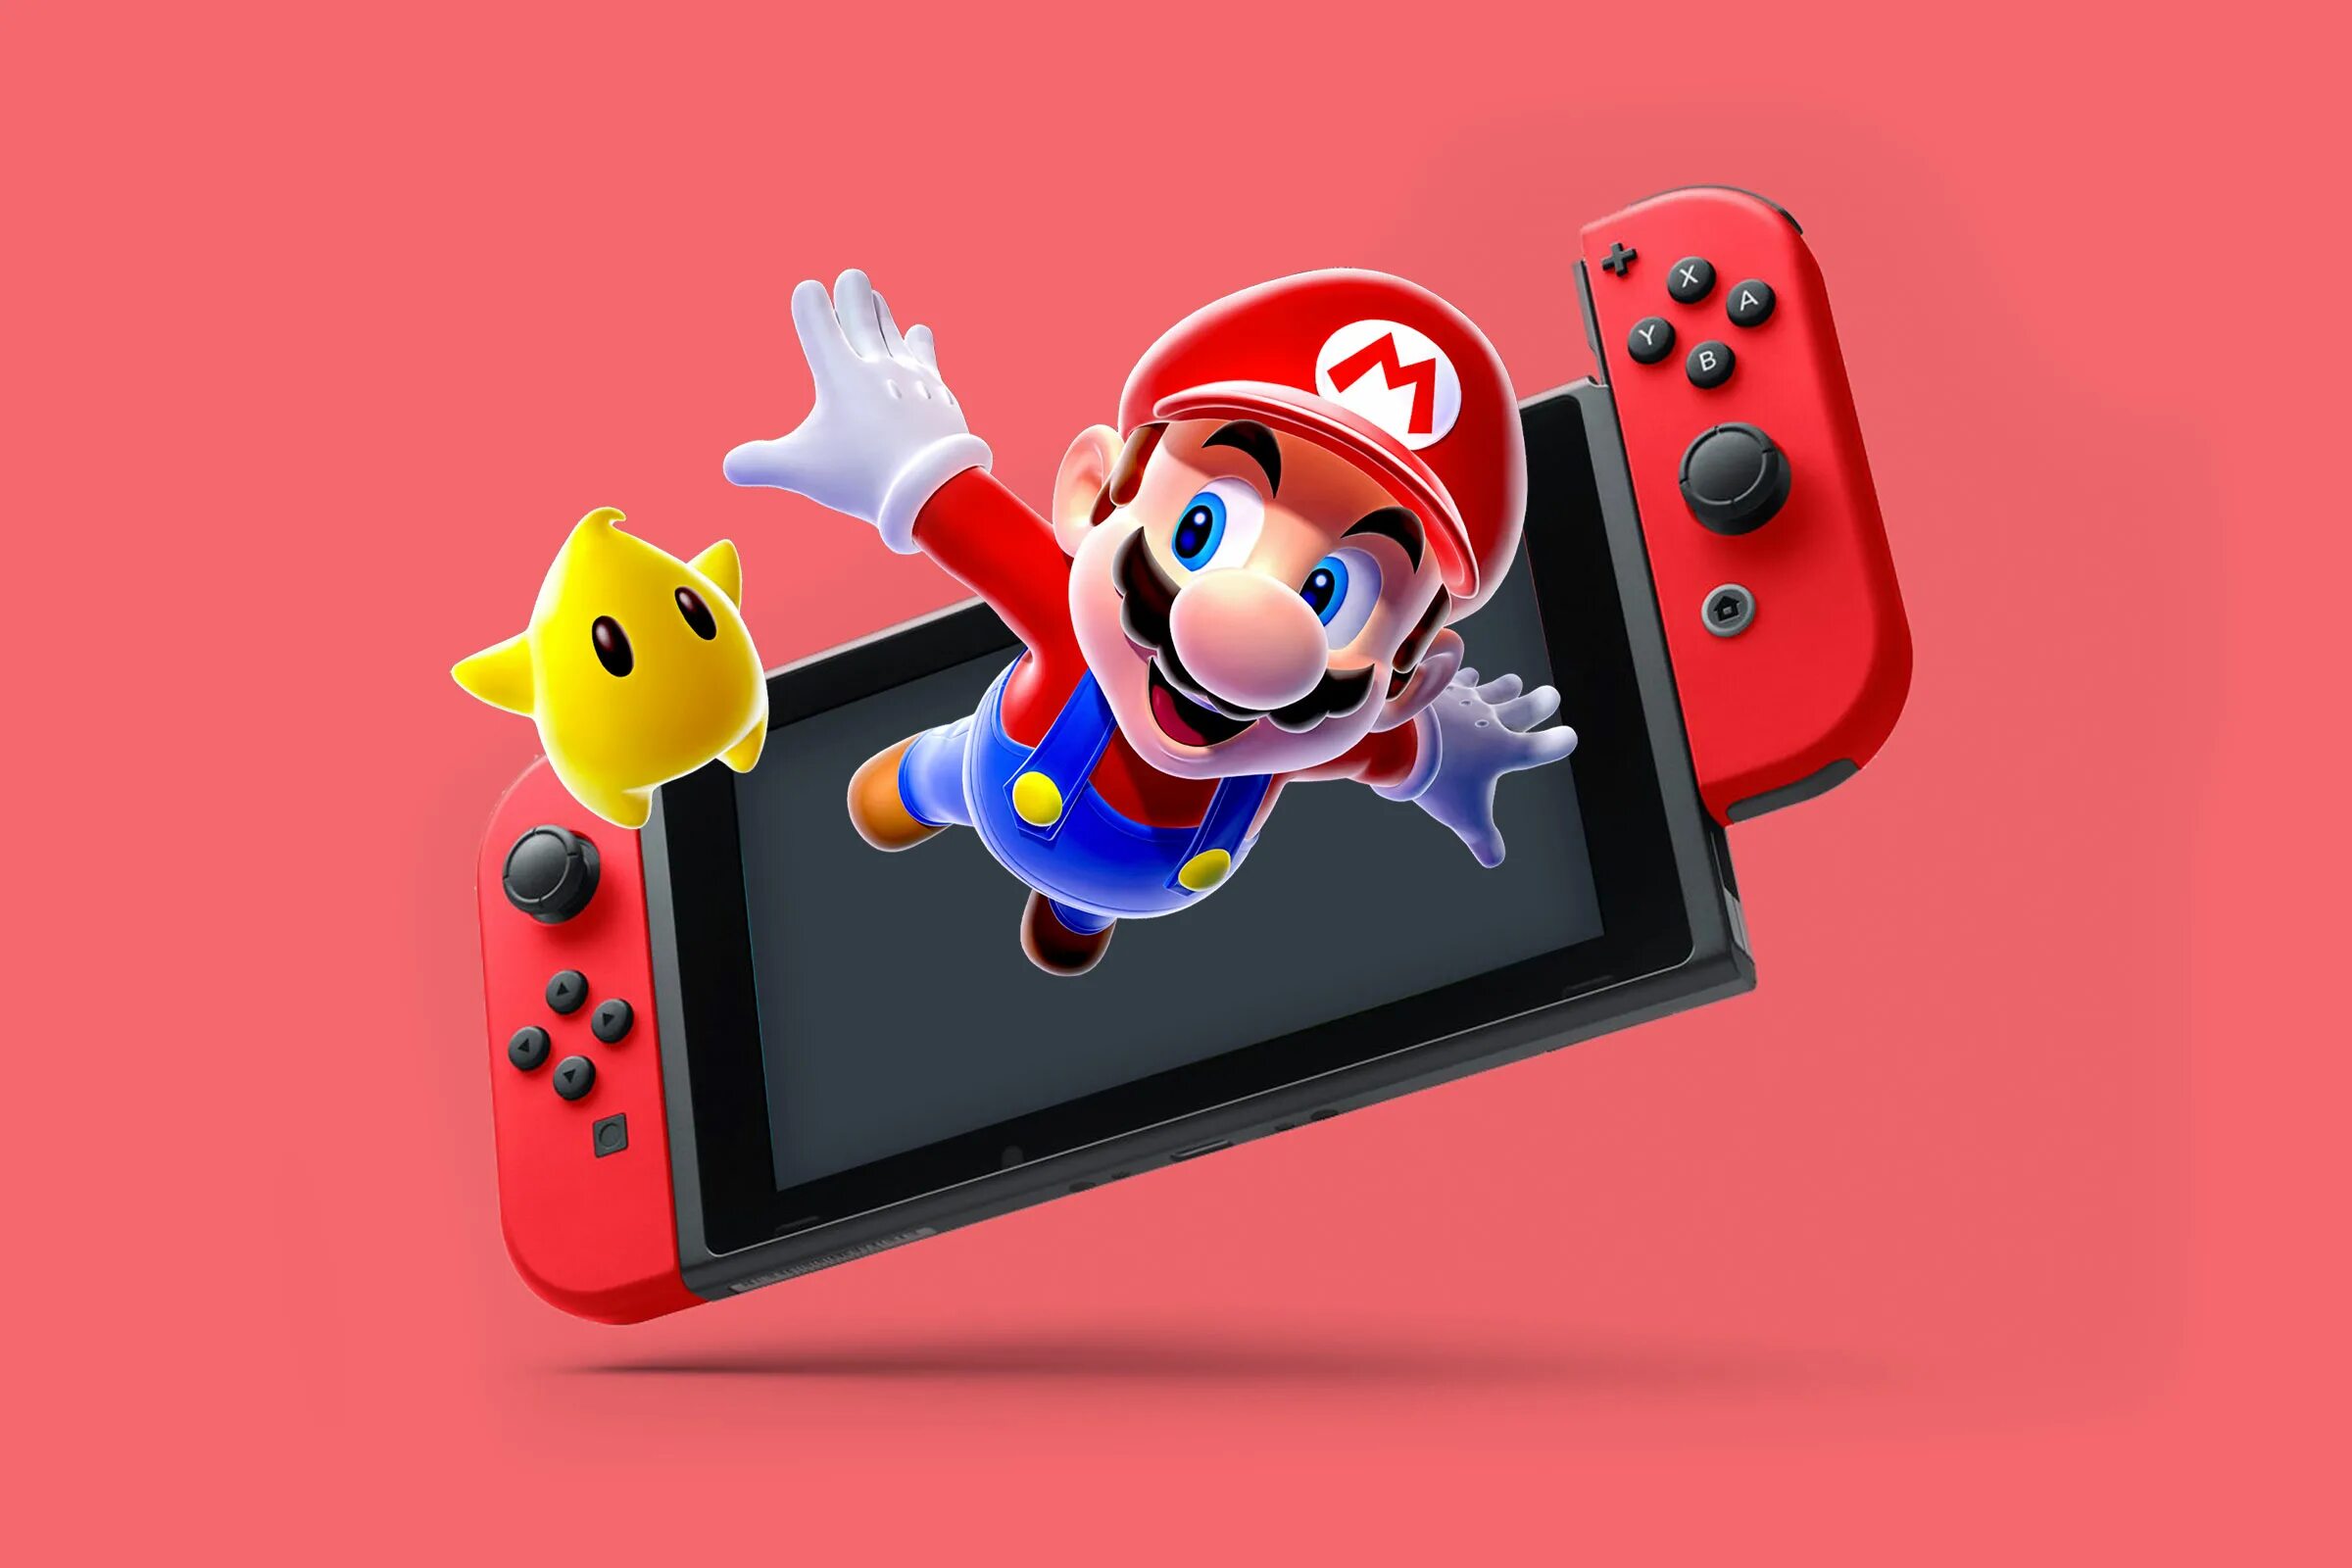 Super Mario Galaxy Nintendo Switch. Mario Galaxy 2 on Nintendo Switch. Марио 3д ворлд на Нинтендо свитч Лайт. Super Mario Galaxy Switch купить. Mario galaxy wii